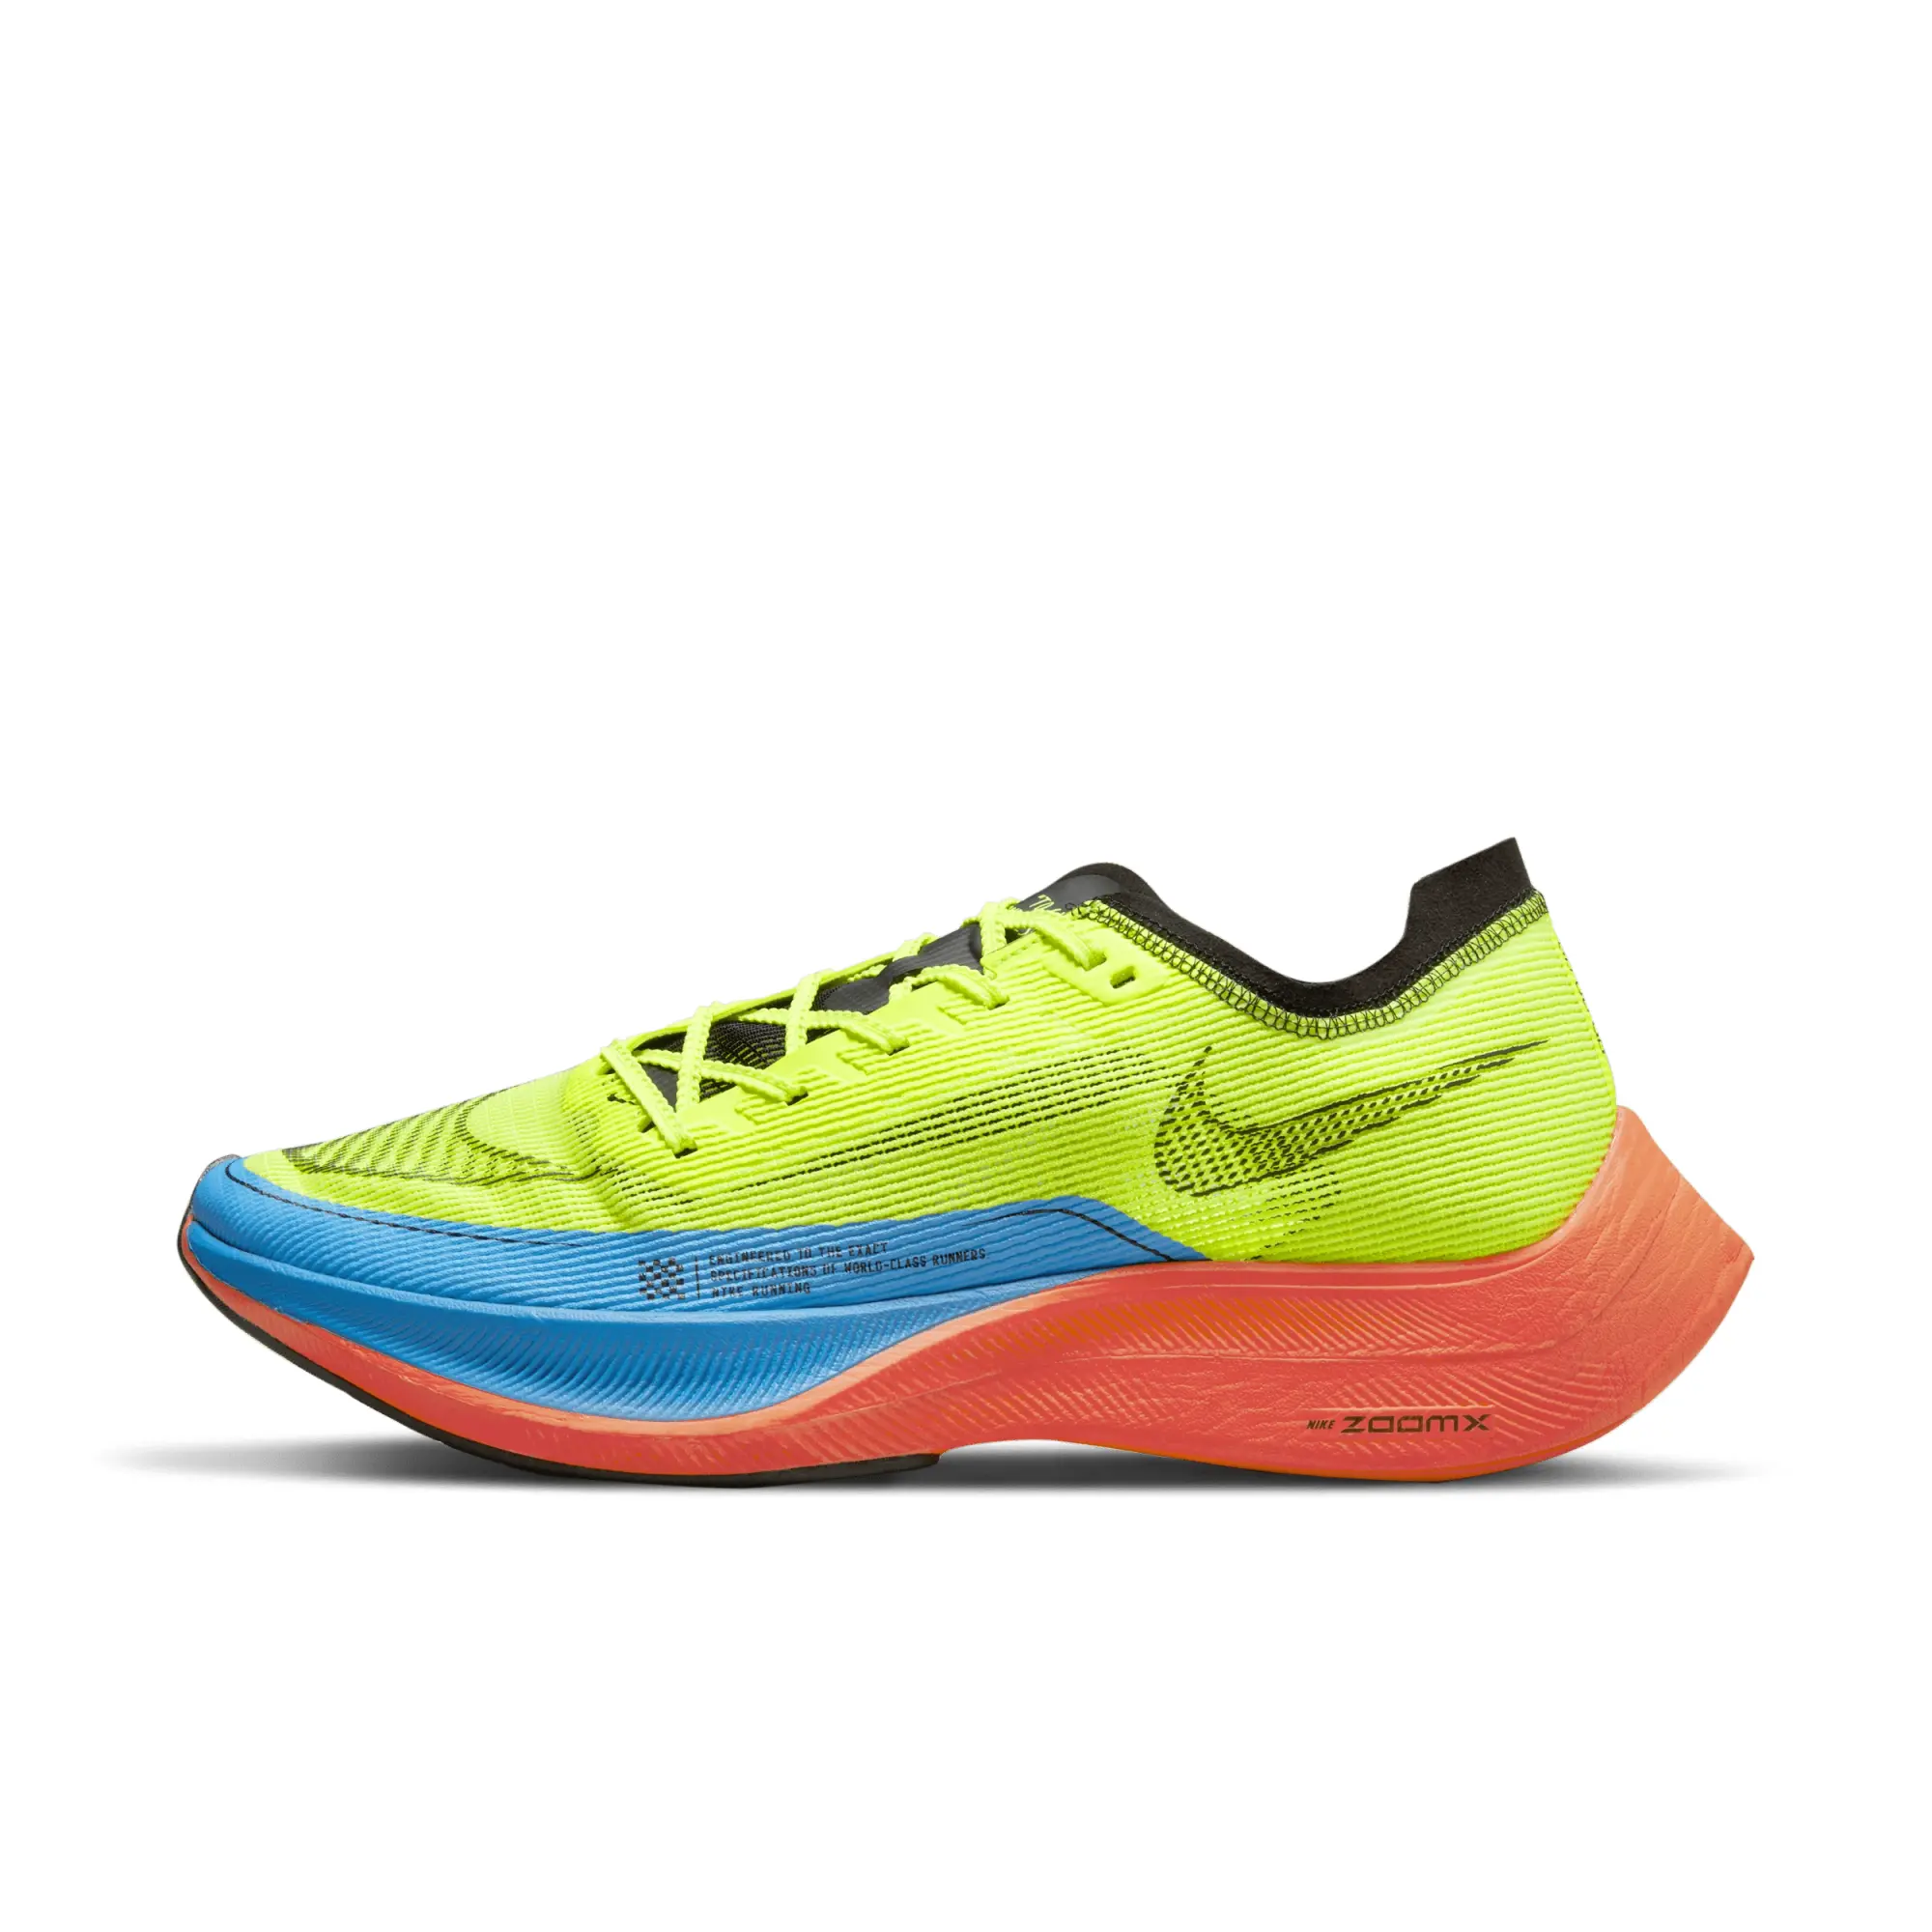 Nike ZoomX Vaporfly Next% 2 Steve Prefontaine Volt Shoes